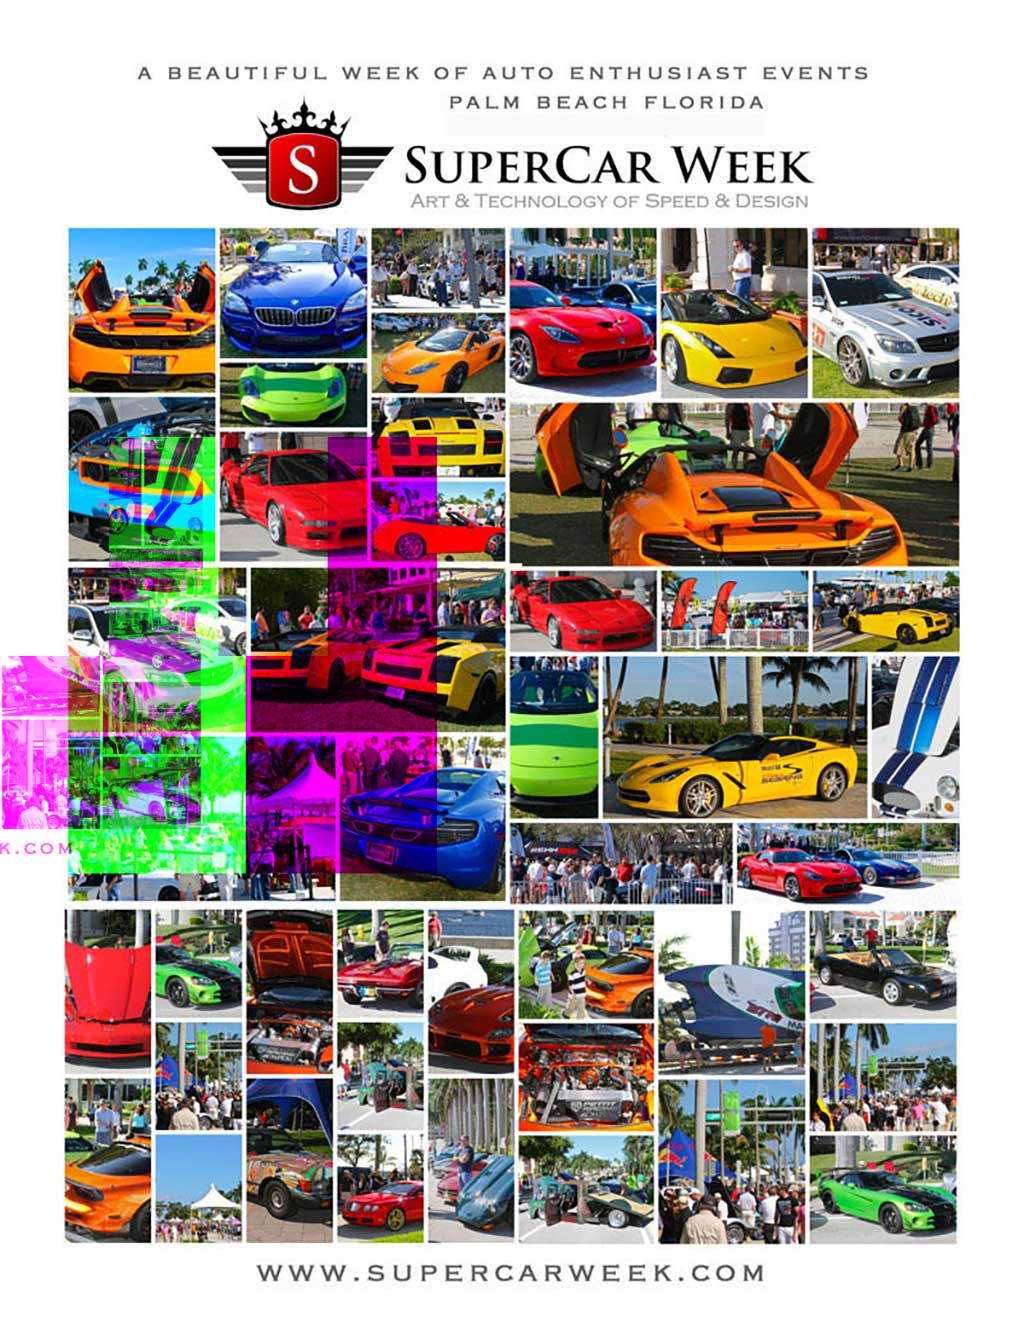 SuperCar Week